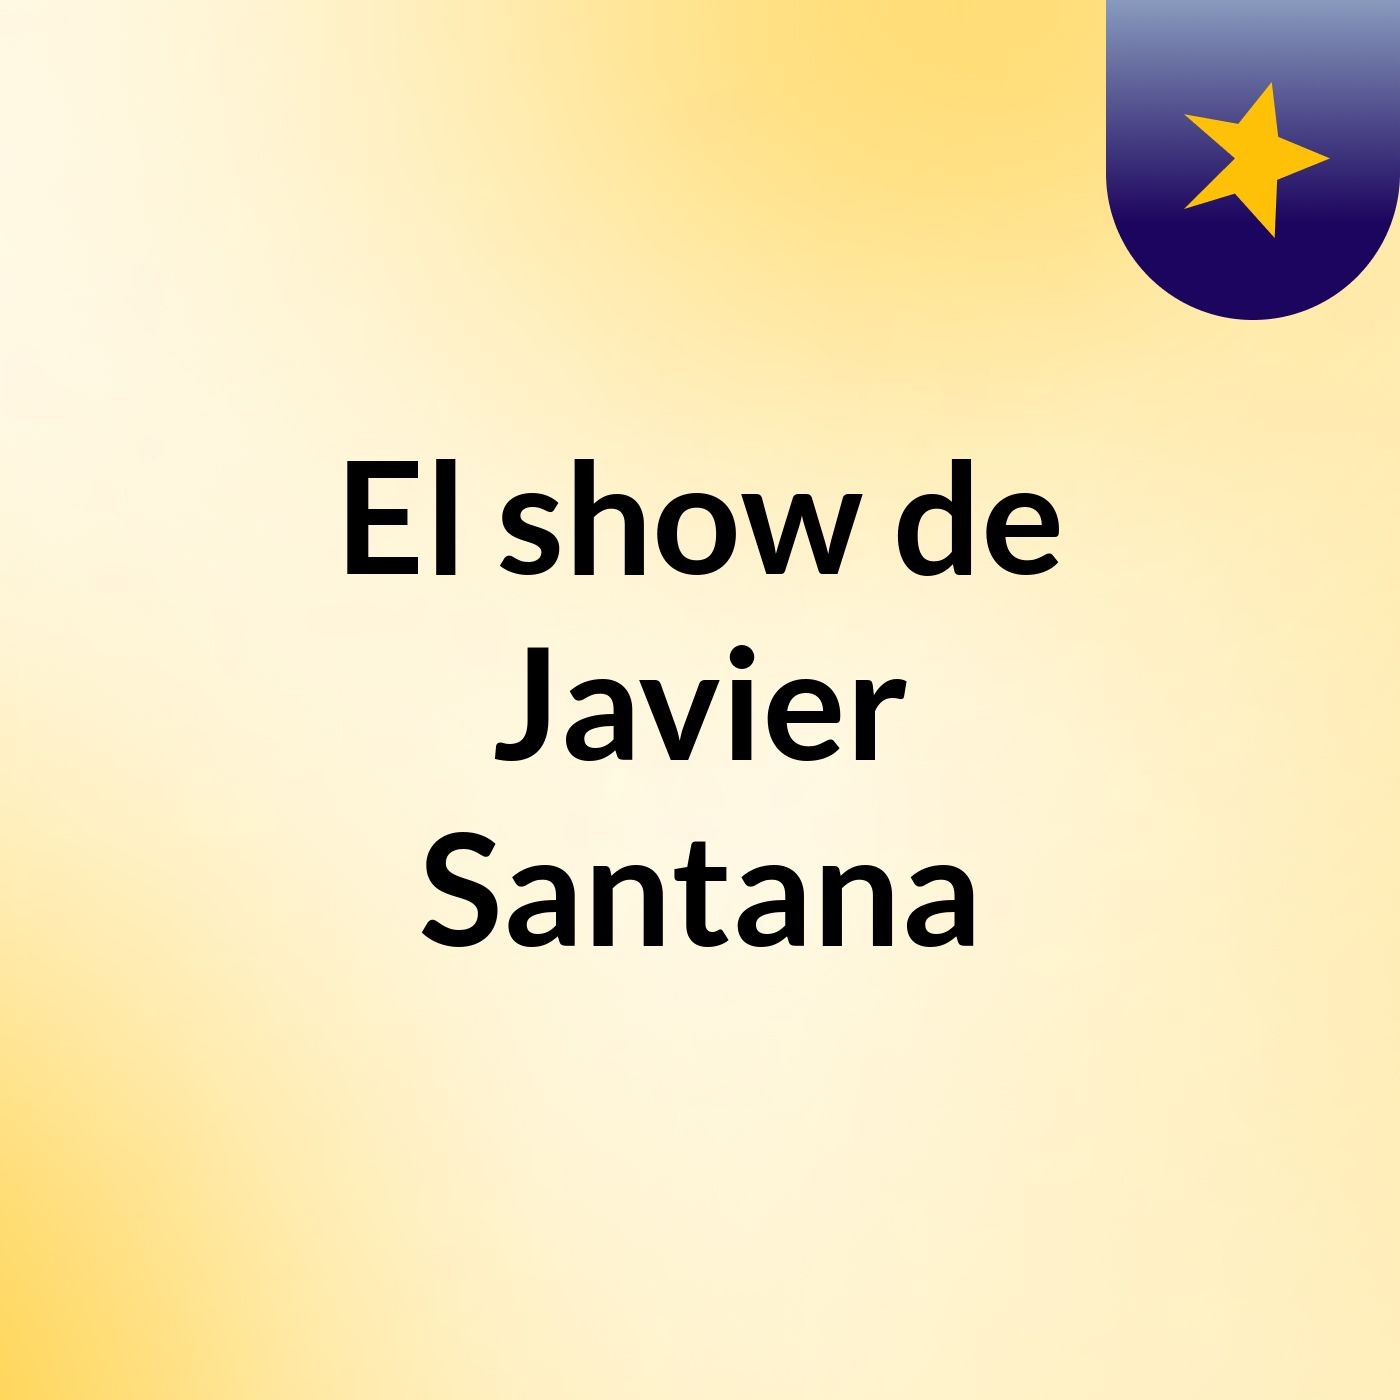 El show de Javier Santana